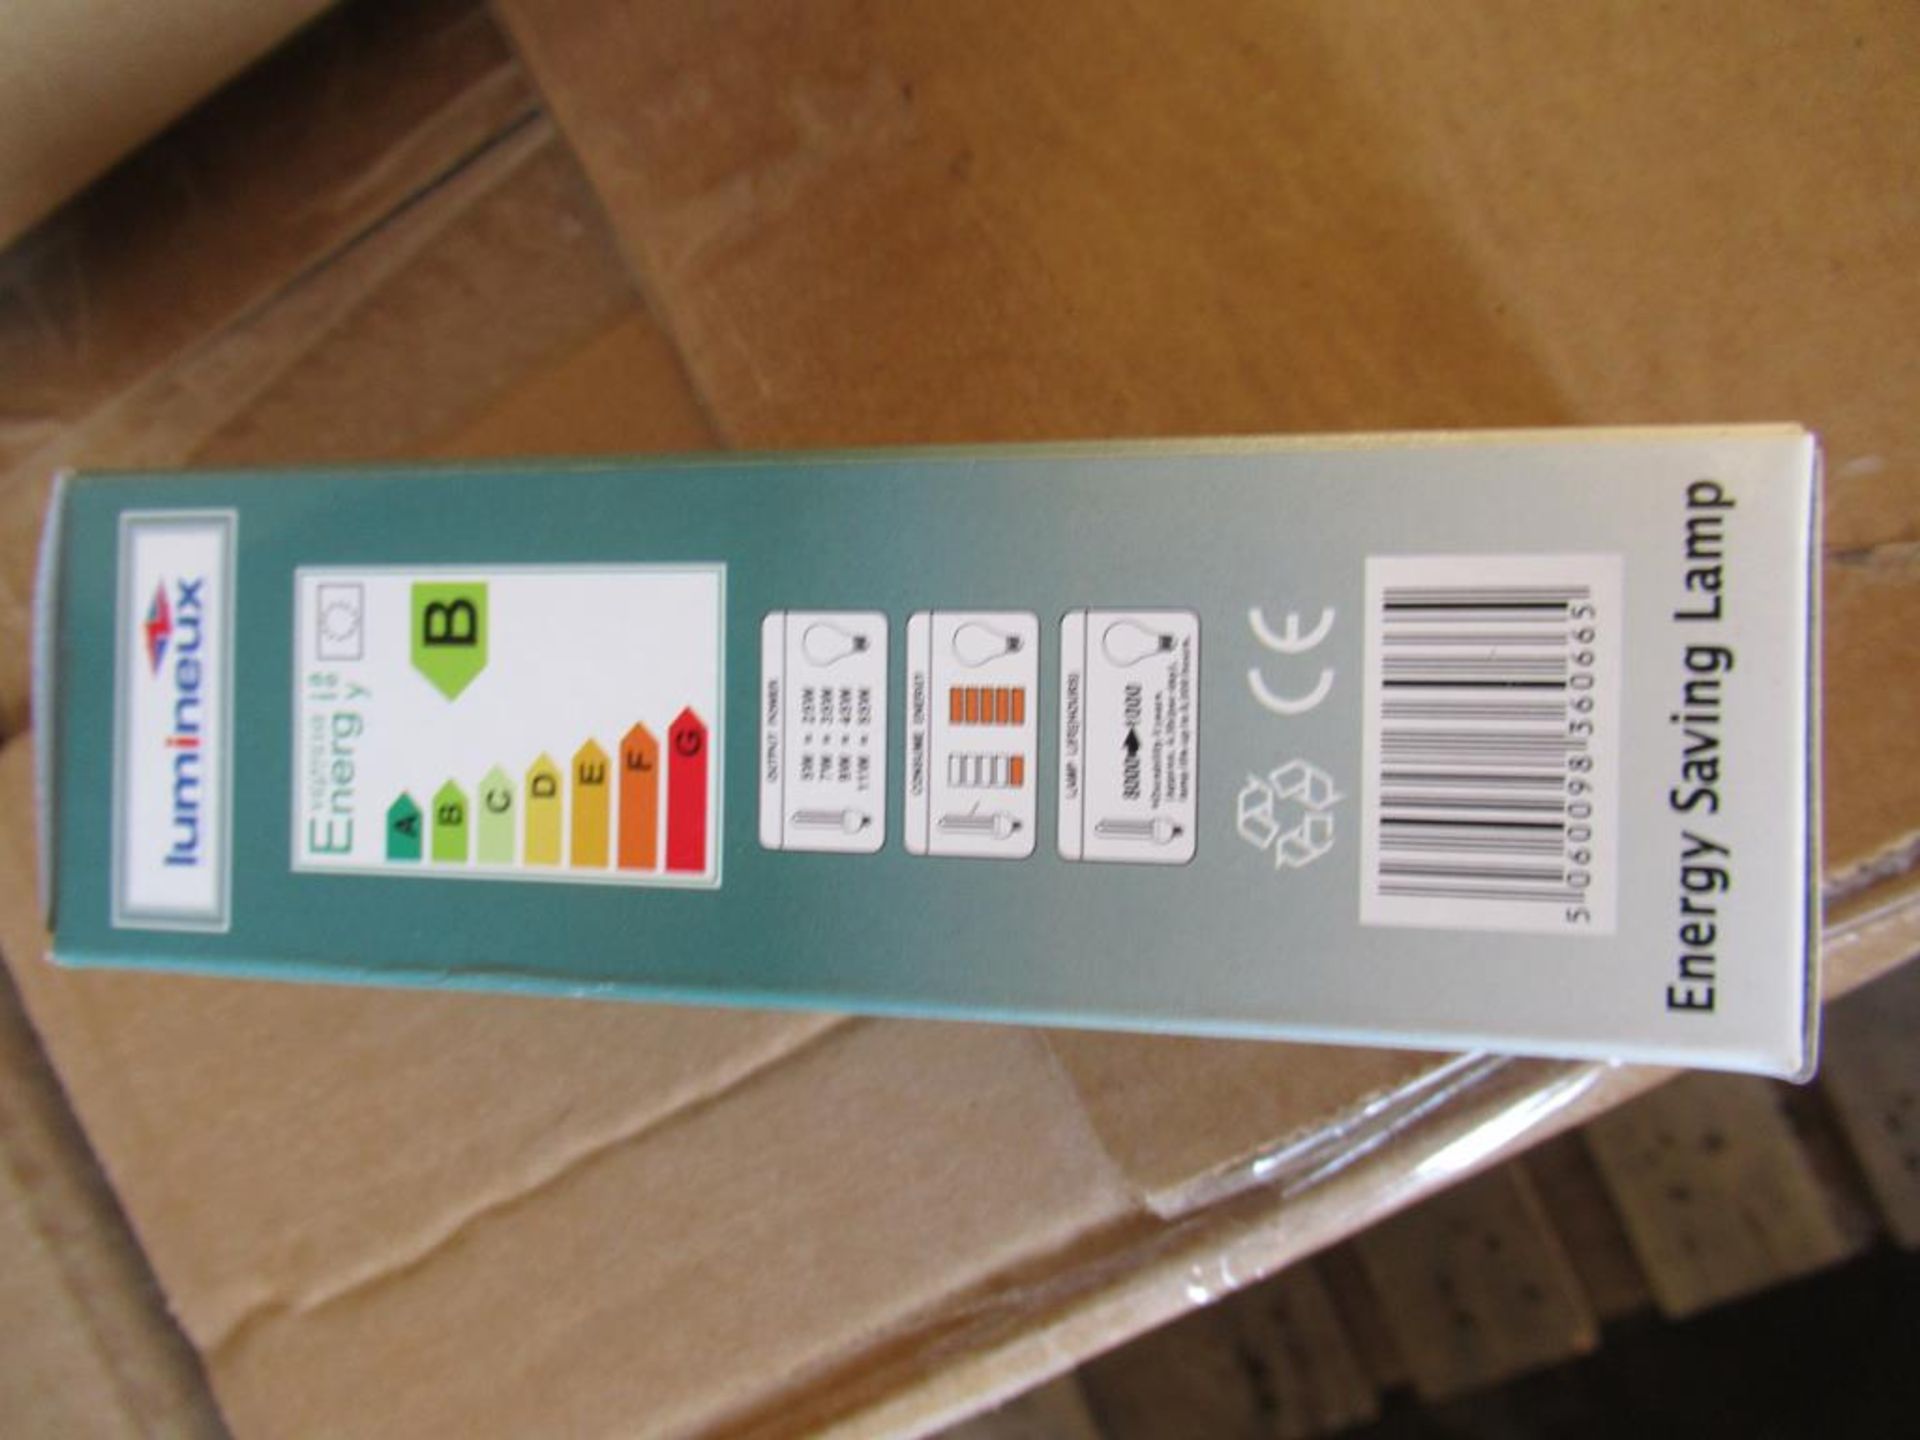 6x boxes of Lumineux Candle 5W B15 3500K 220-240V Energy Saving Bulbs (50pcs per box) - Image 4 of 4